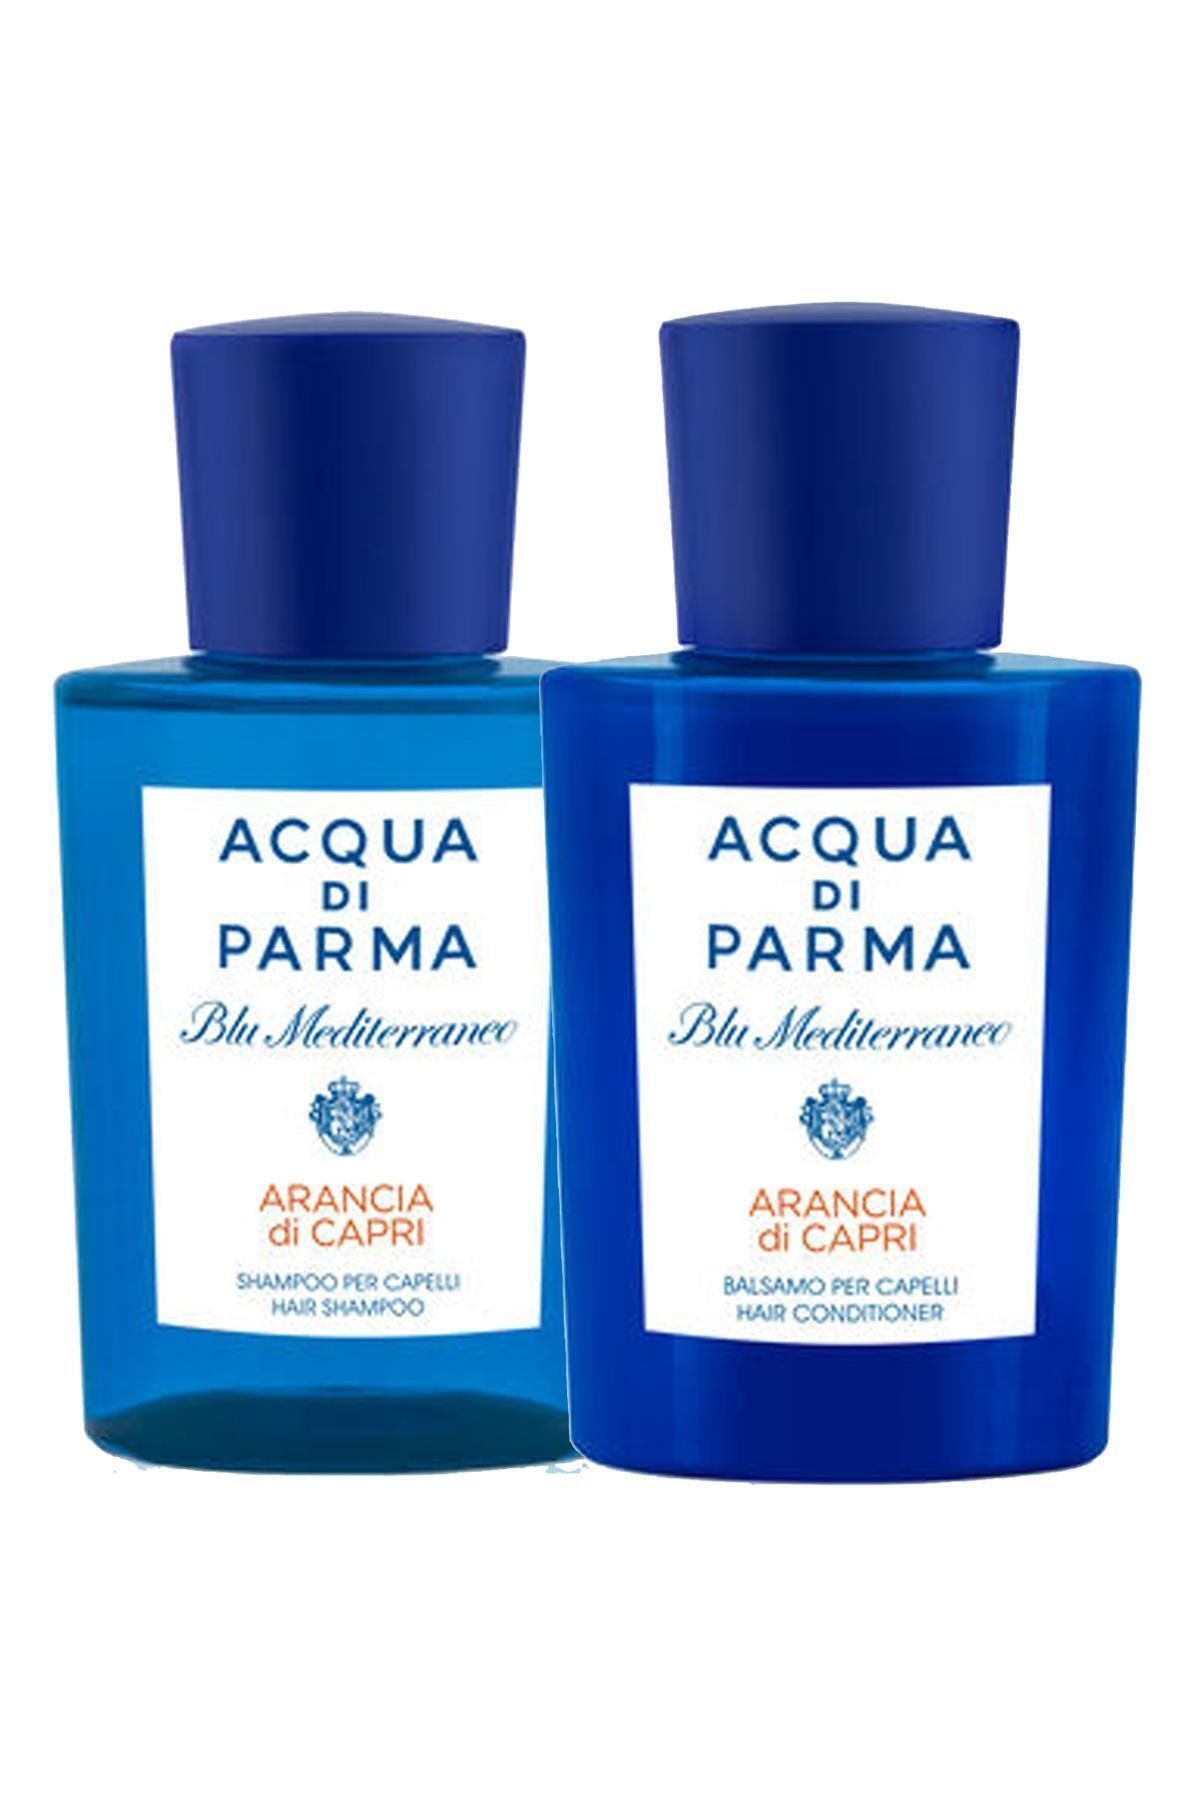 Acqua di Parma 75 мл. Acqua di Parma Blu Mediterraneo шампунь. Аква ди Парма 40 мл шампунь. Acqua di Parma Blu Mediterraneo набор.